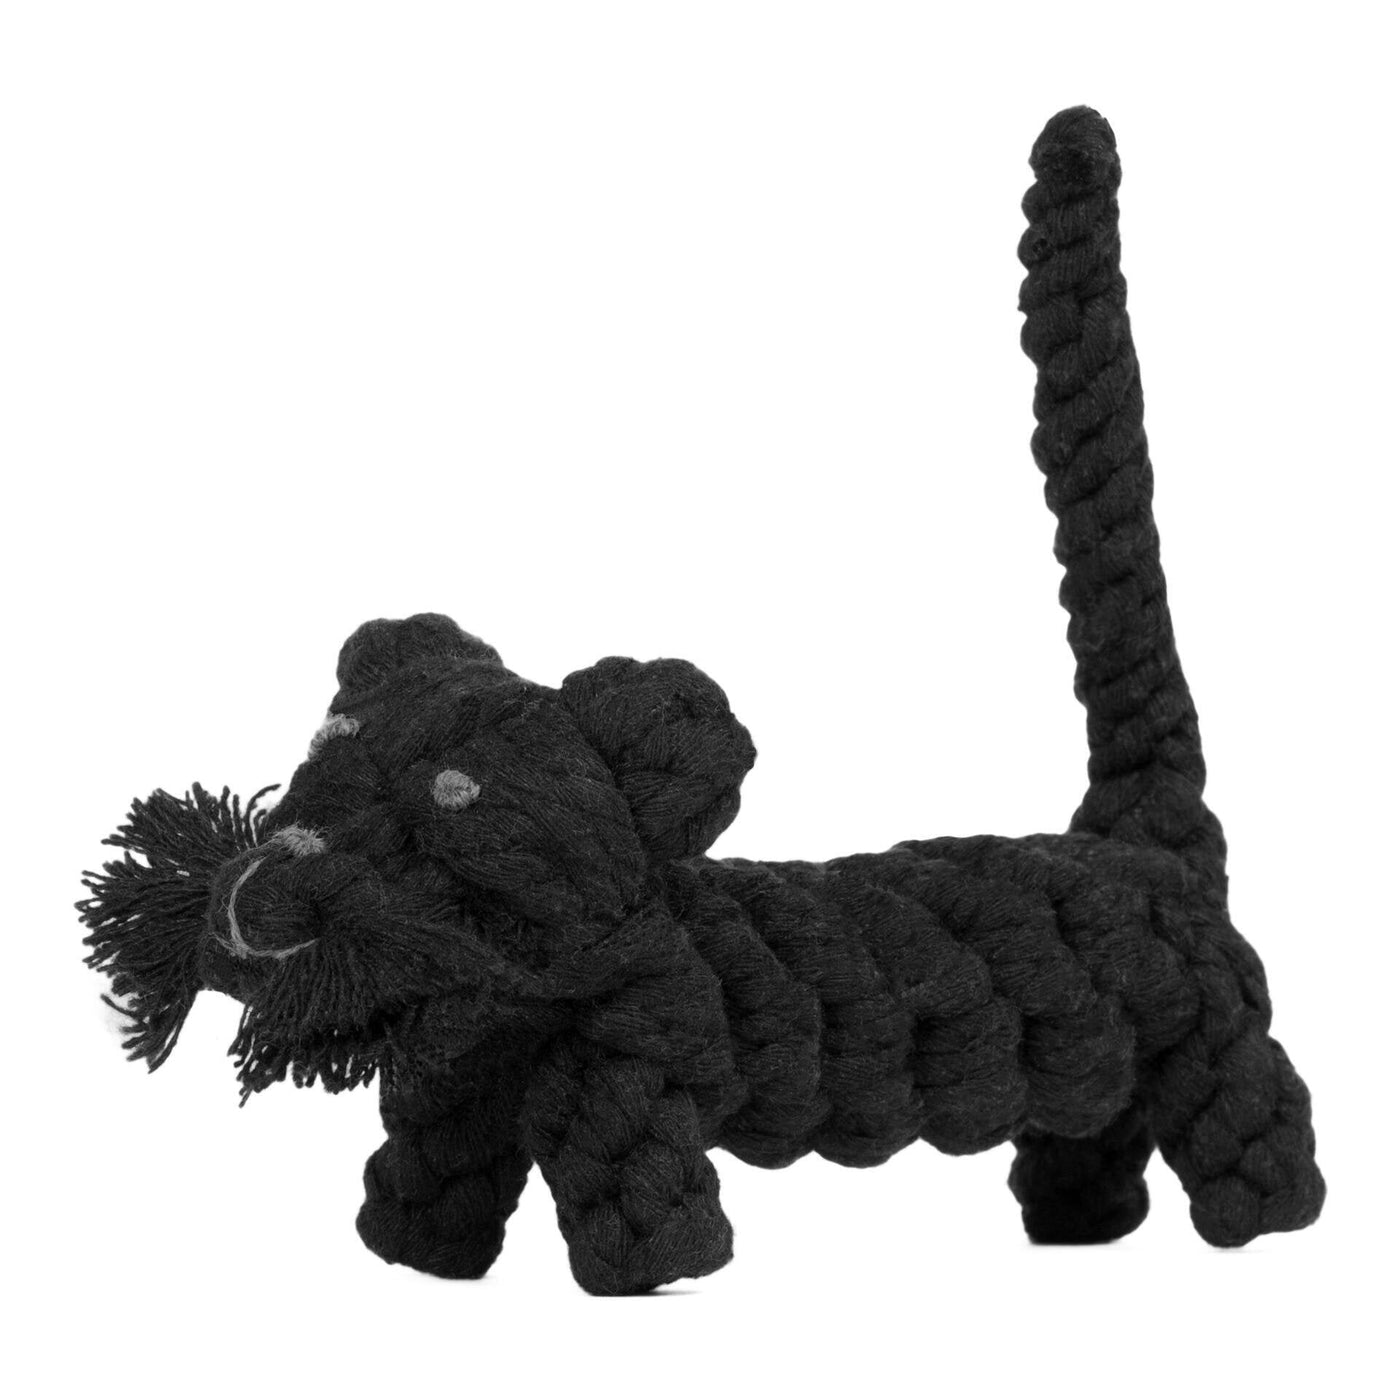 Laboni Hunde & Katzen Seilspielzeug Kater Casanova - schwarz 16x13x5 cm aus Baumwolle - Bitangel RENOVATE & FURNISH HOMES GmbH